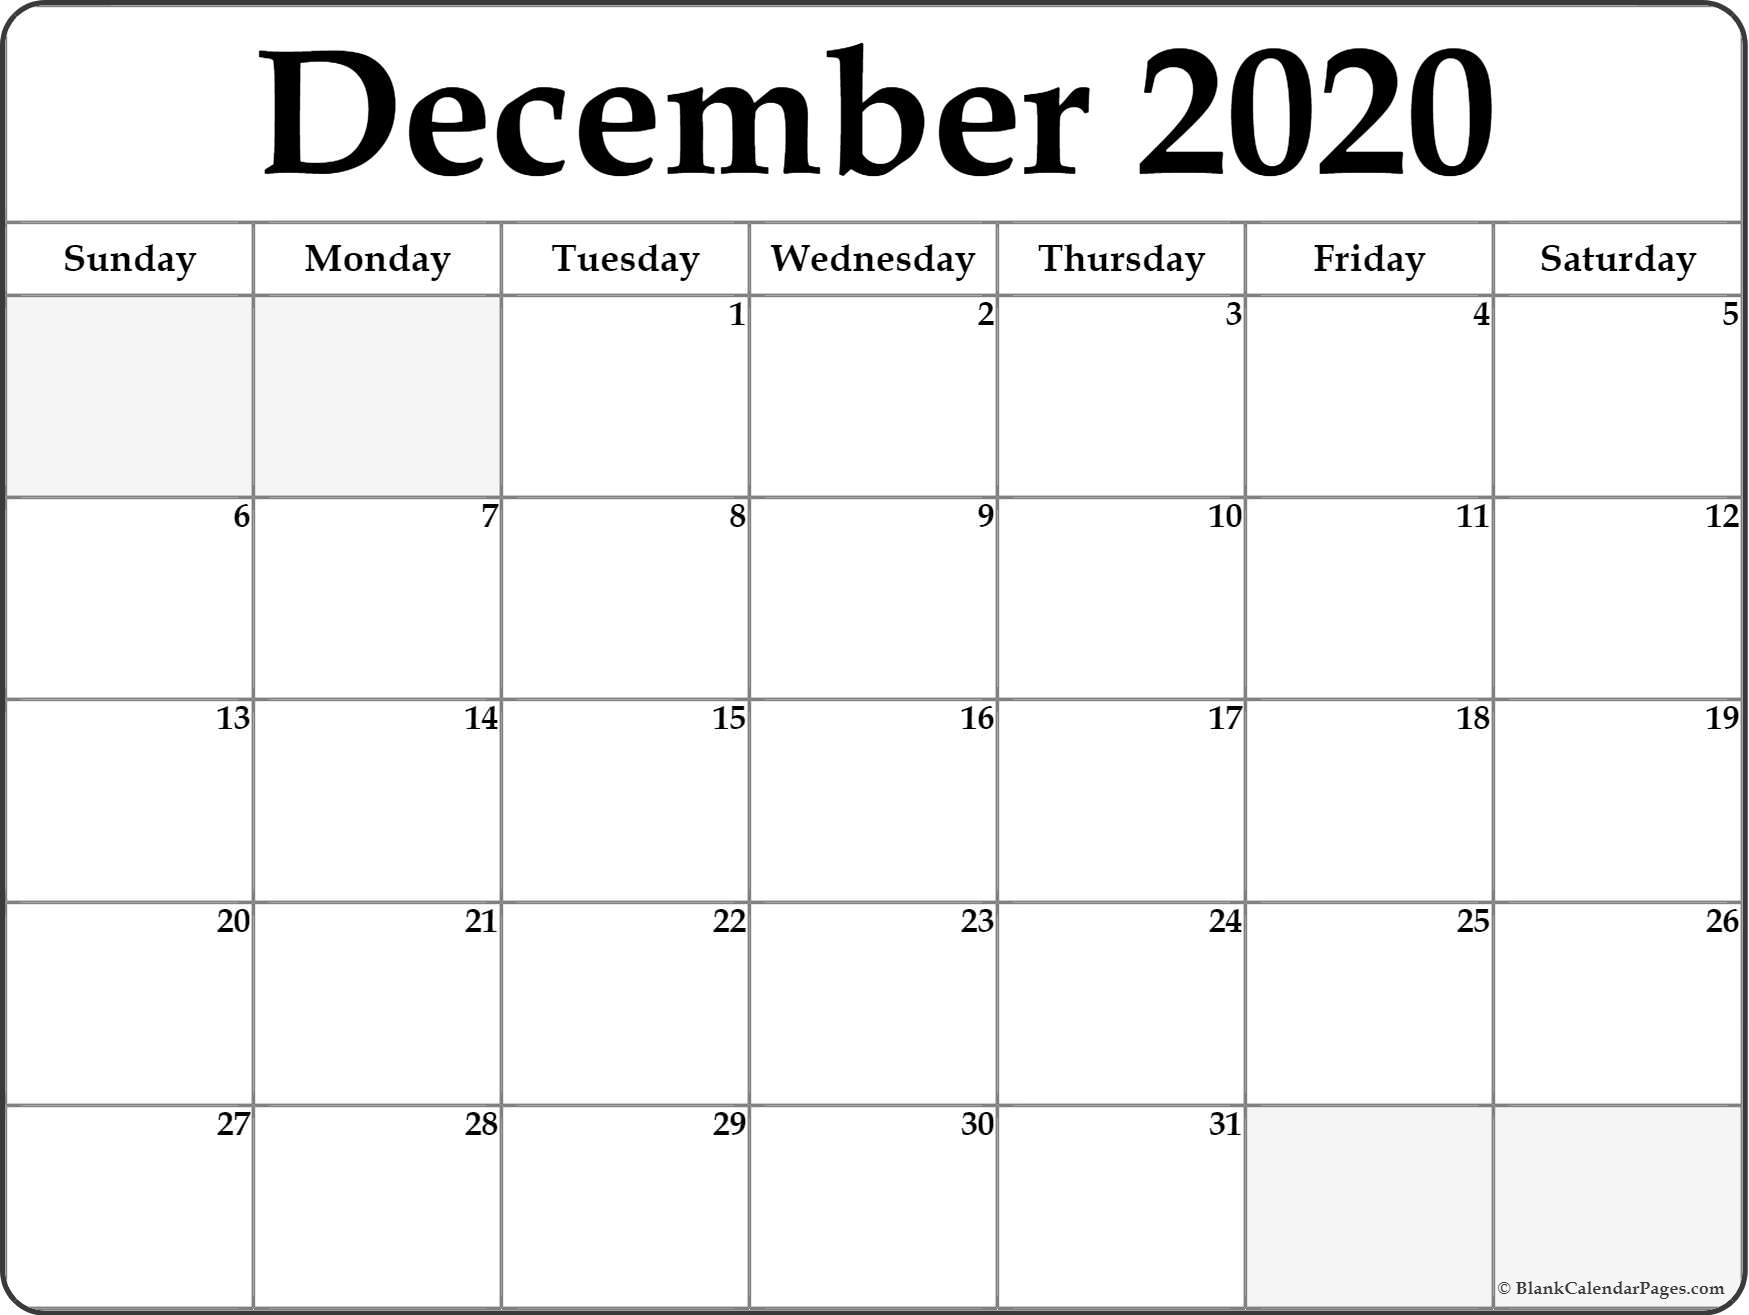 December 2020 Calendar | Free Printable Monthly Calendars